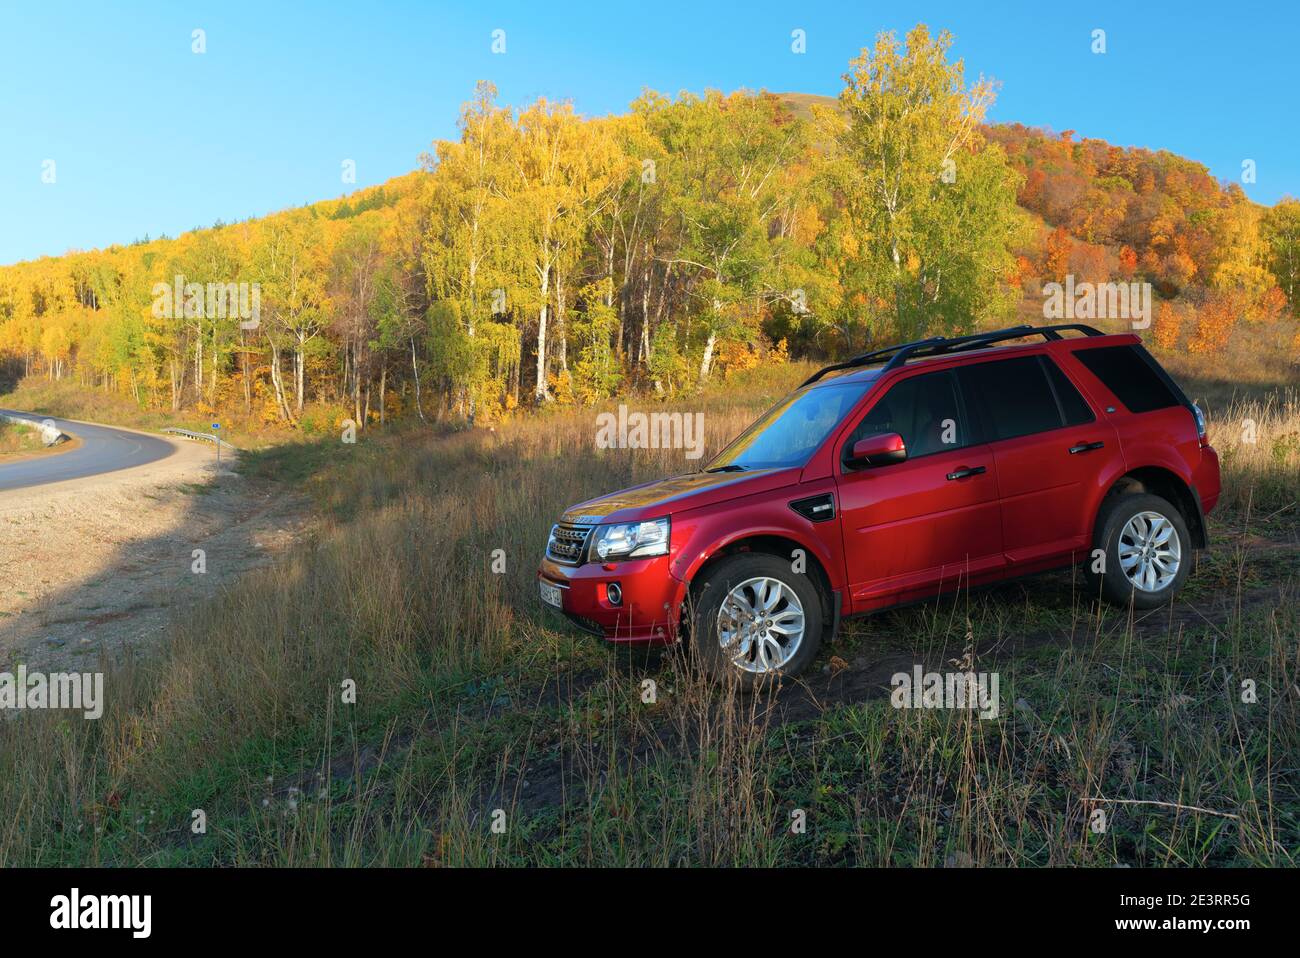 RUSSIA, Rep. of BASHKORTOSTAN, Kugarchinsky District, MRAKOVO village - SEPTEMBER 27, 2020. A red LAND ROVER FREELANDER 2 SUV stands on a dirt road, i Stock Photo